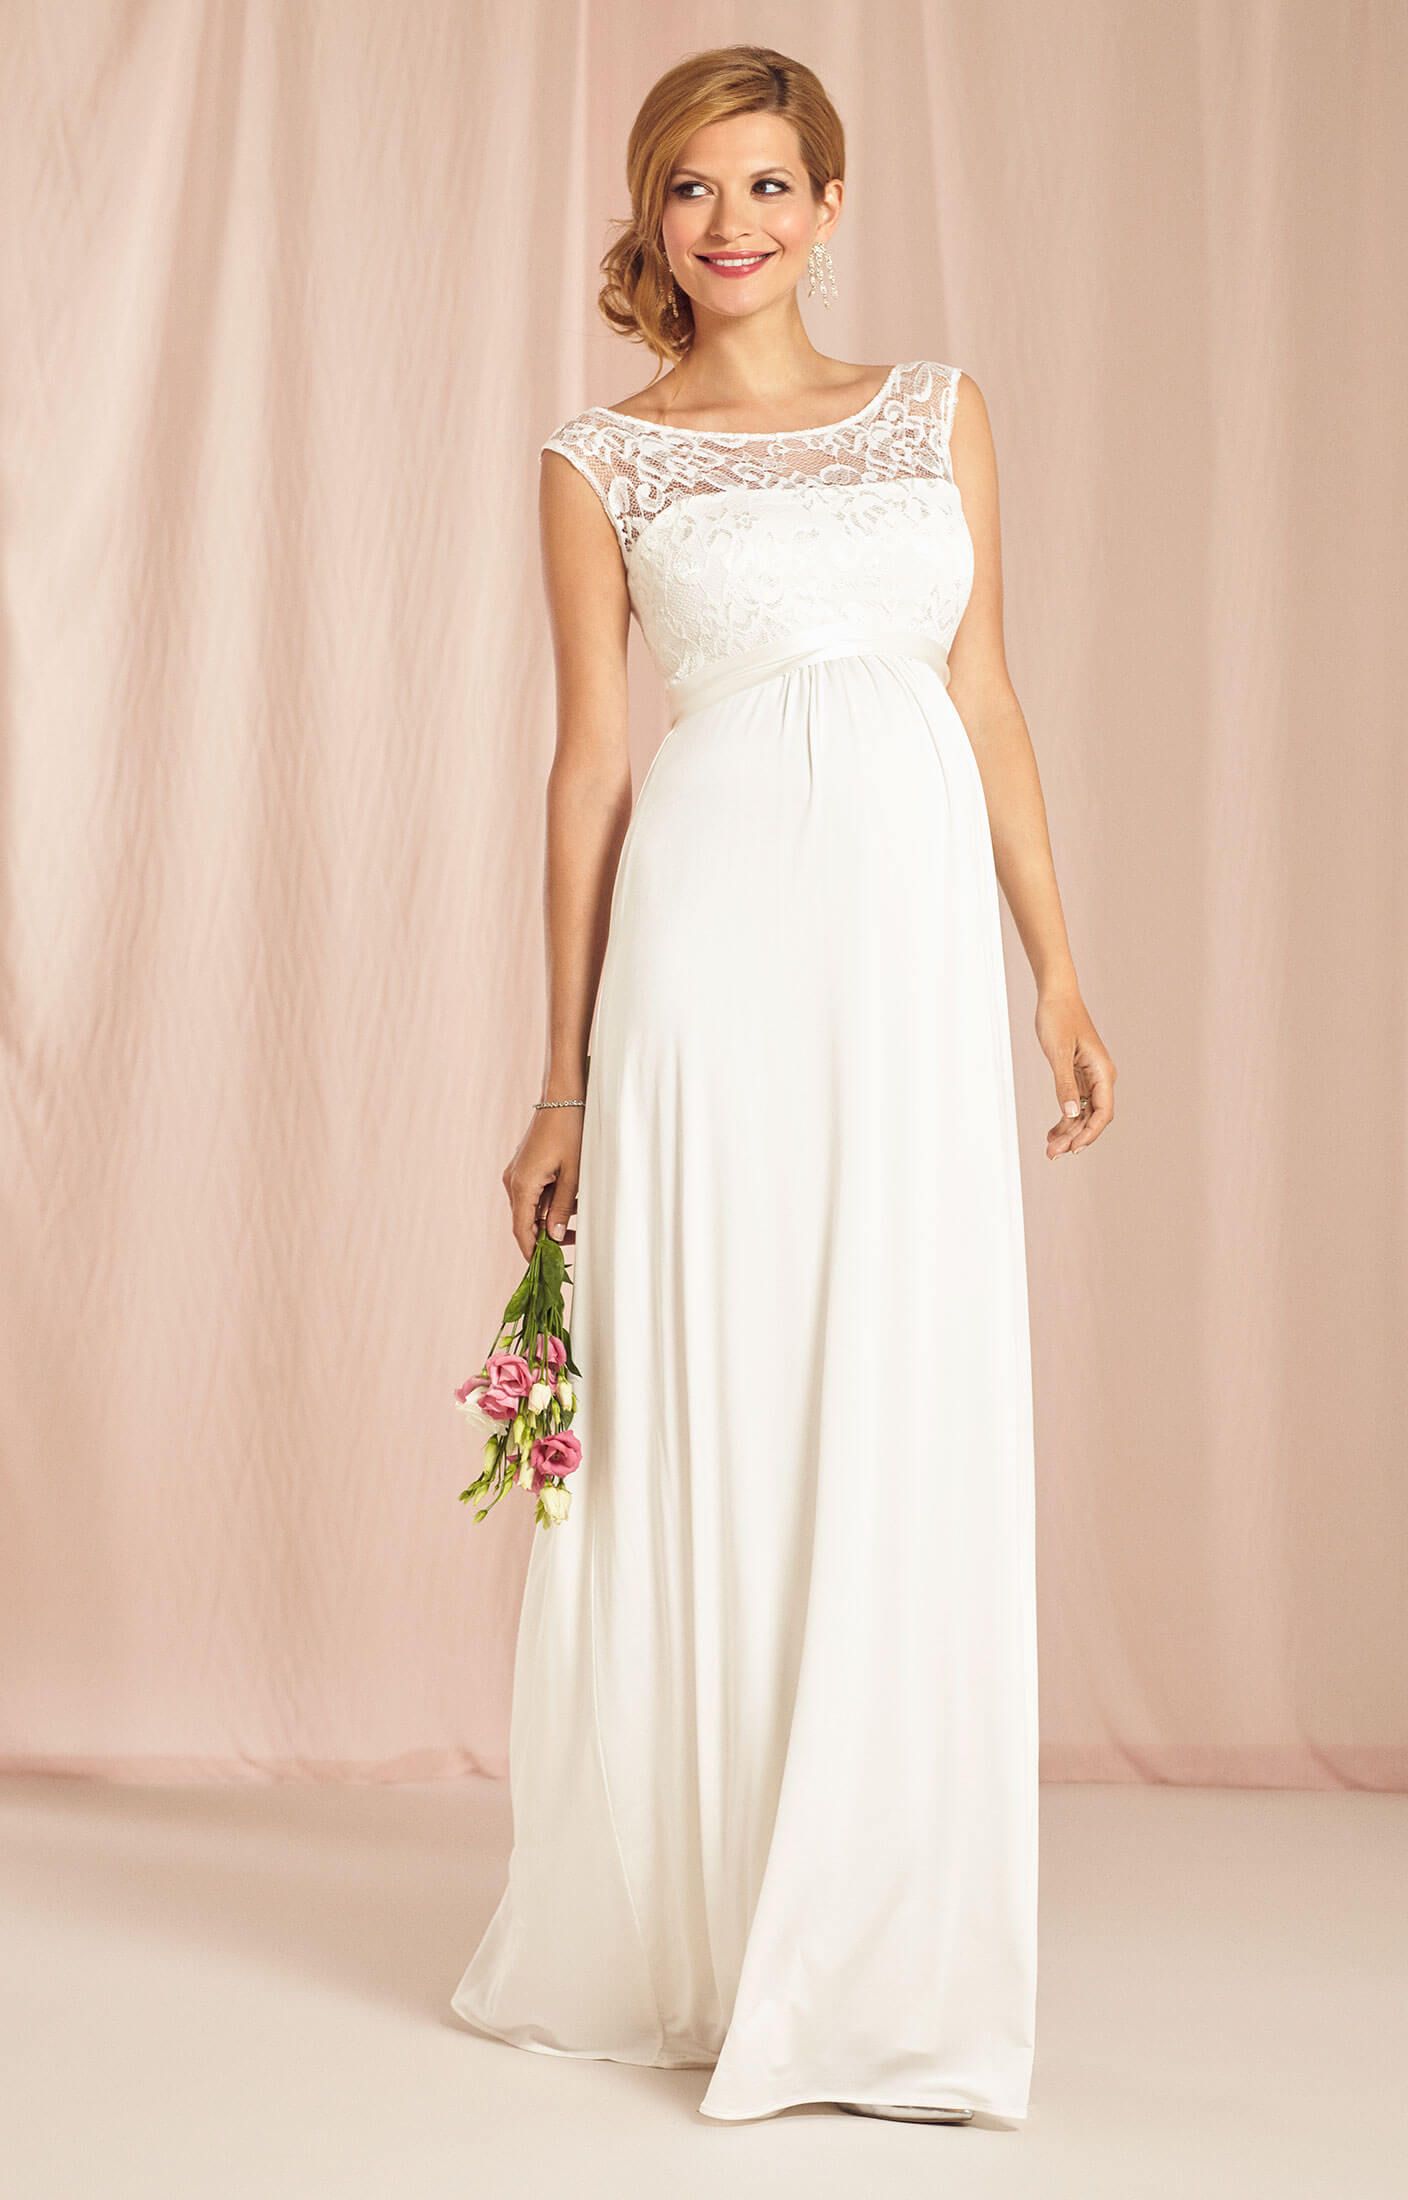 Tiffany Valencia Wedding Dress 2021